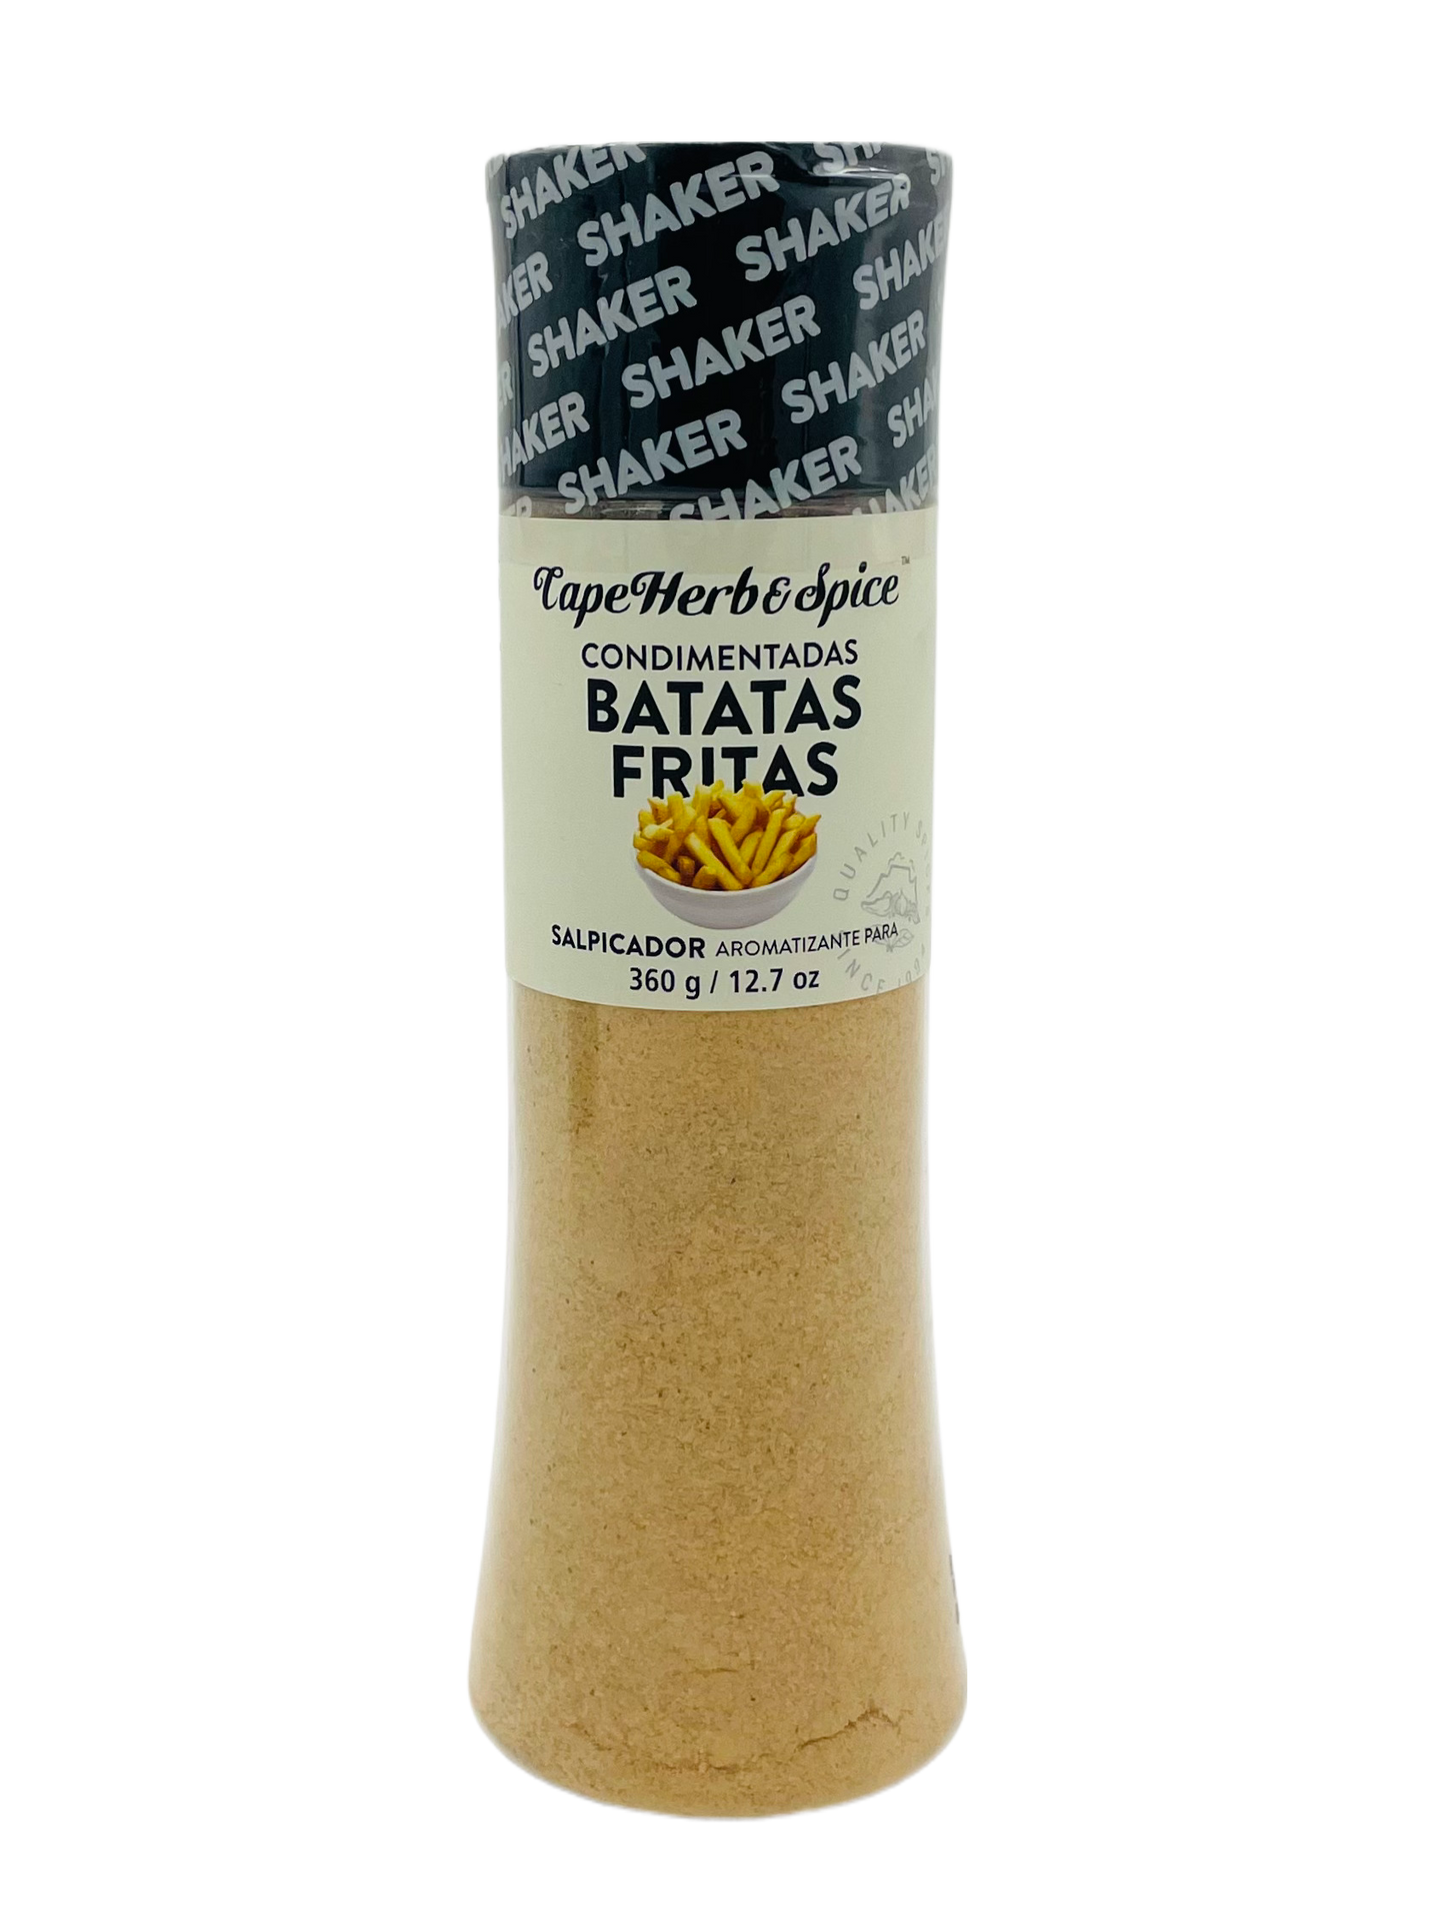 Cape Herb Batatas Chip Spice 360g